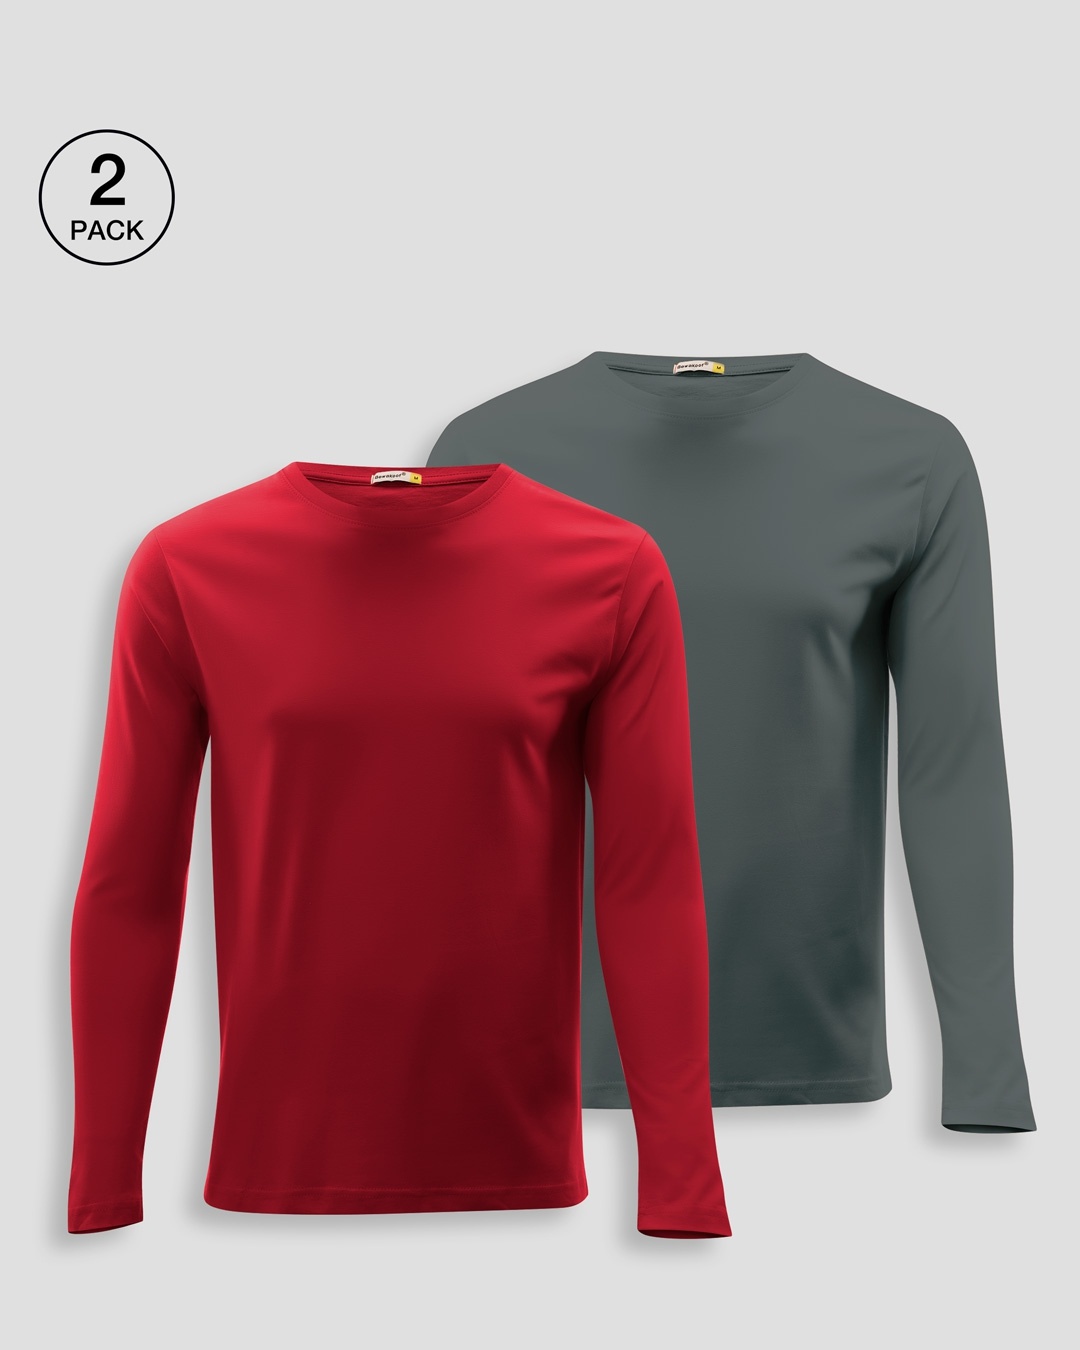 Shop Men's Plain Full Sleeve T-shirt Pack of 2(Red & Grey )-Front